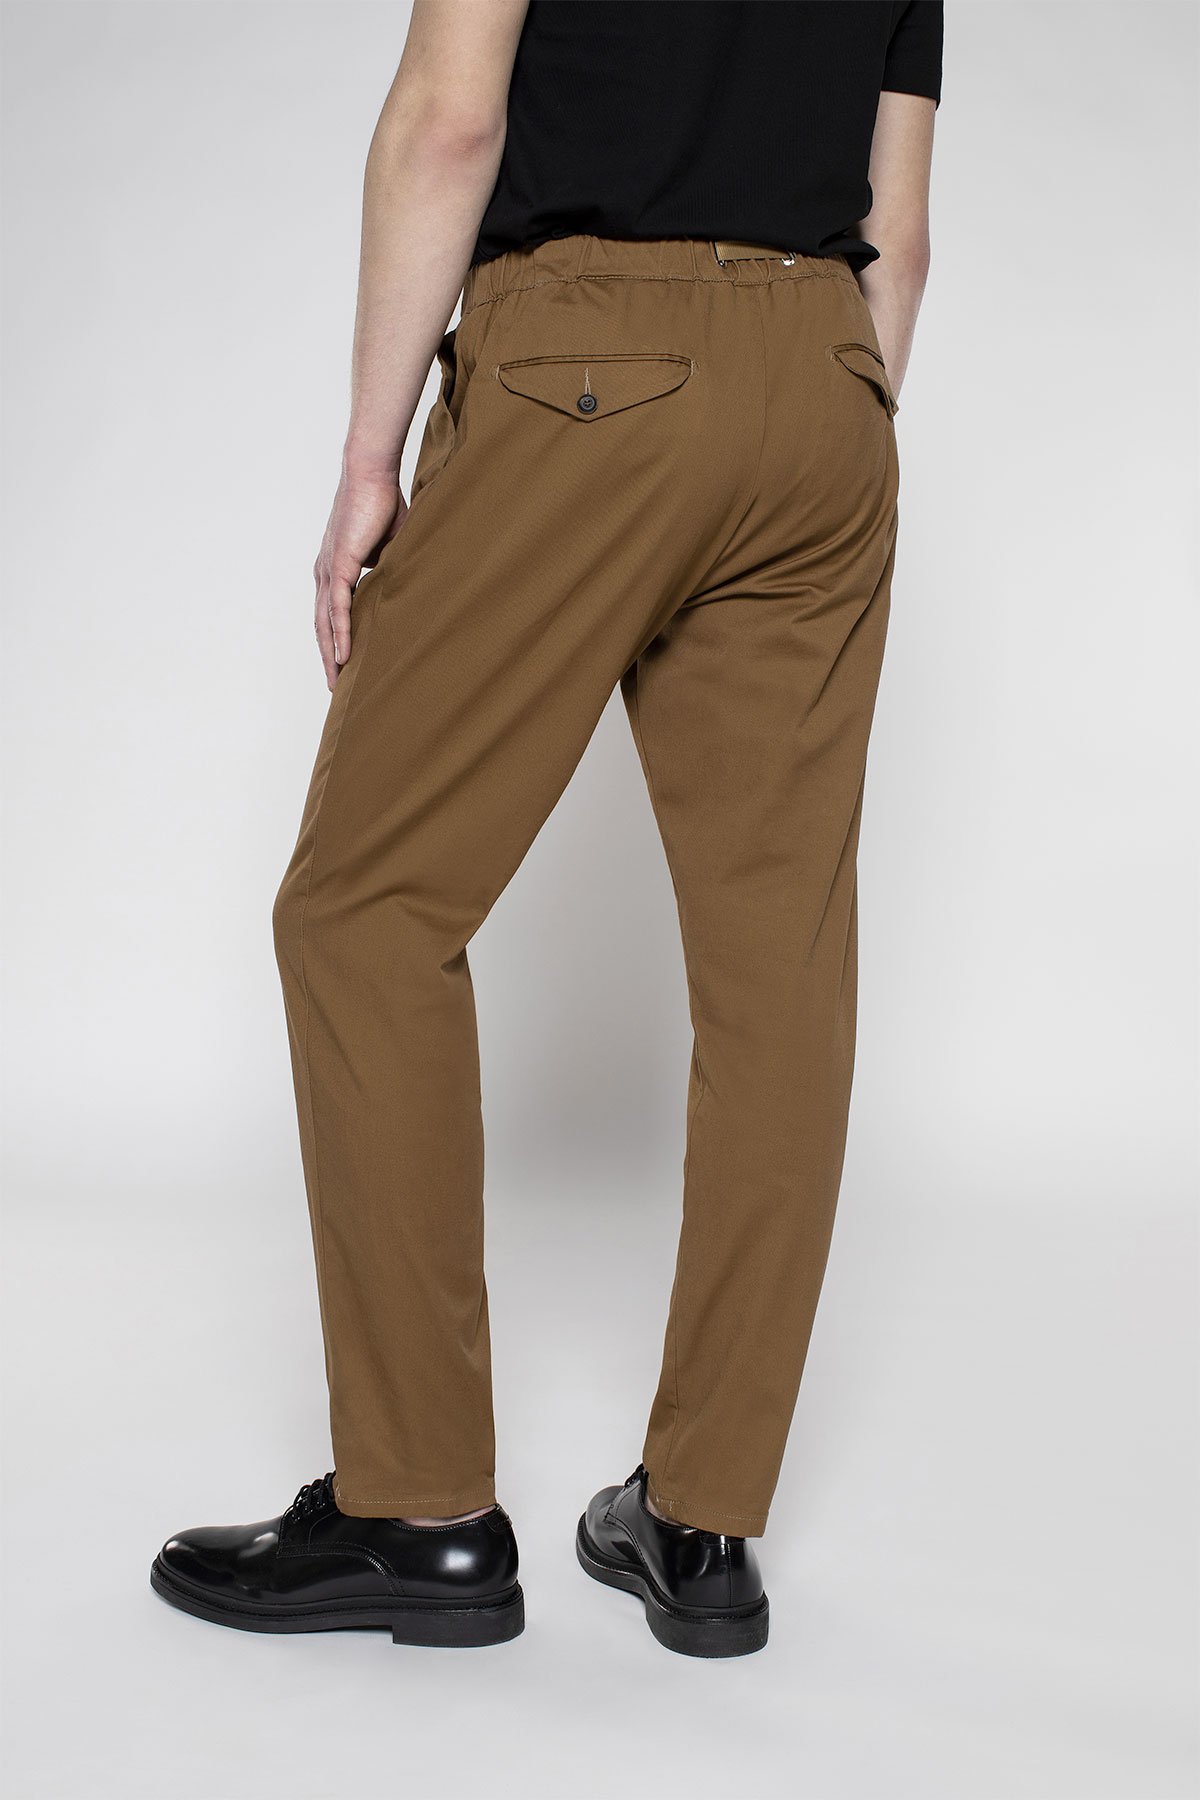 Khaki Pants with Pinces - White Sand